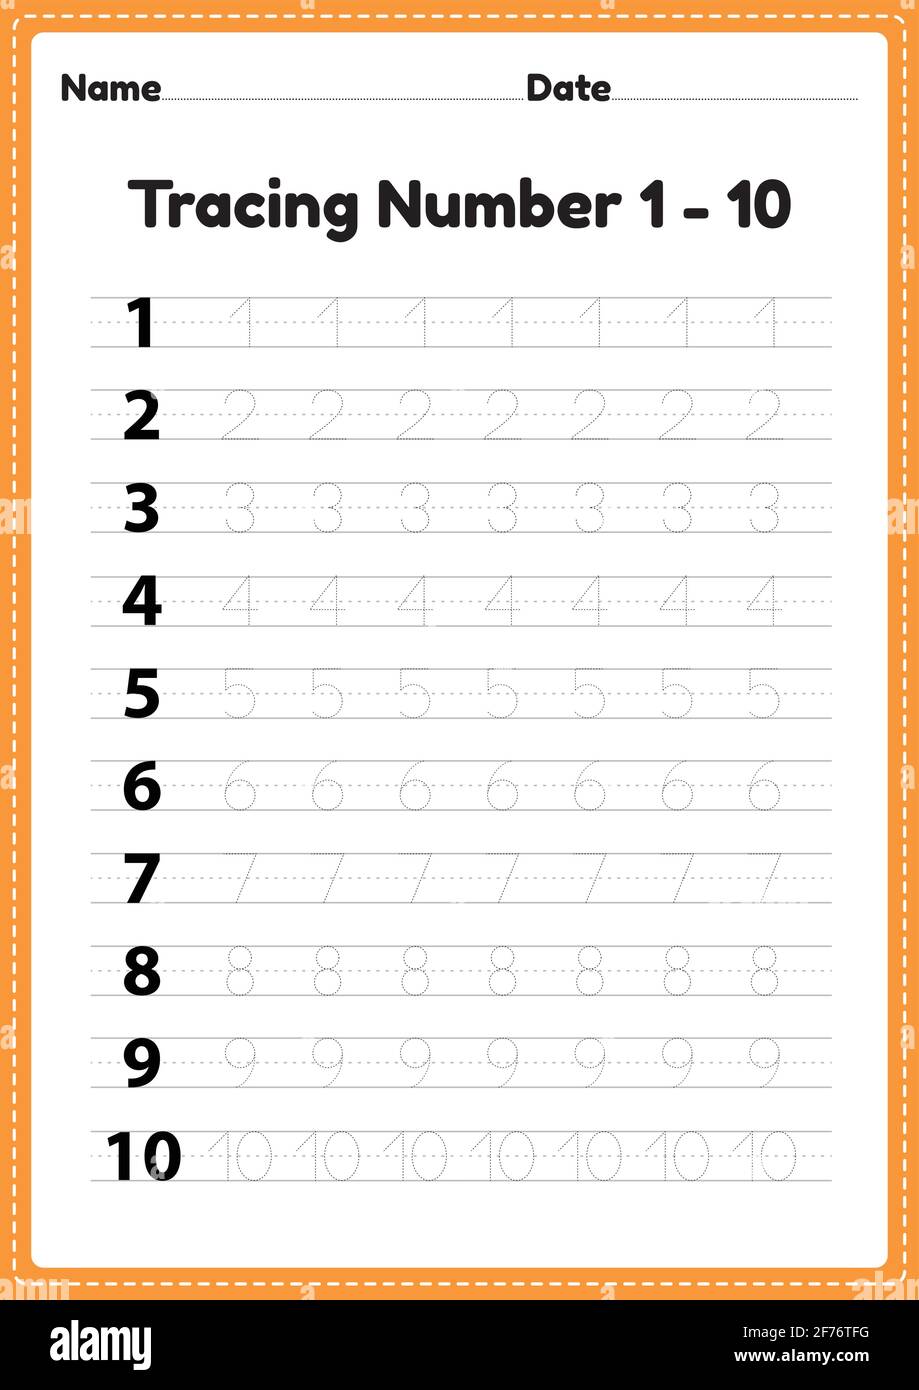 tracing-number-1-10-worksheet-for-kindergarten-and-preschool-kids-for-educational-handwriting